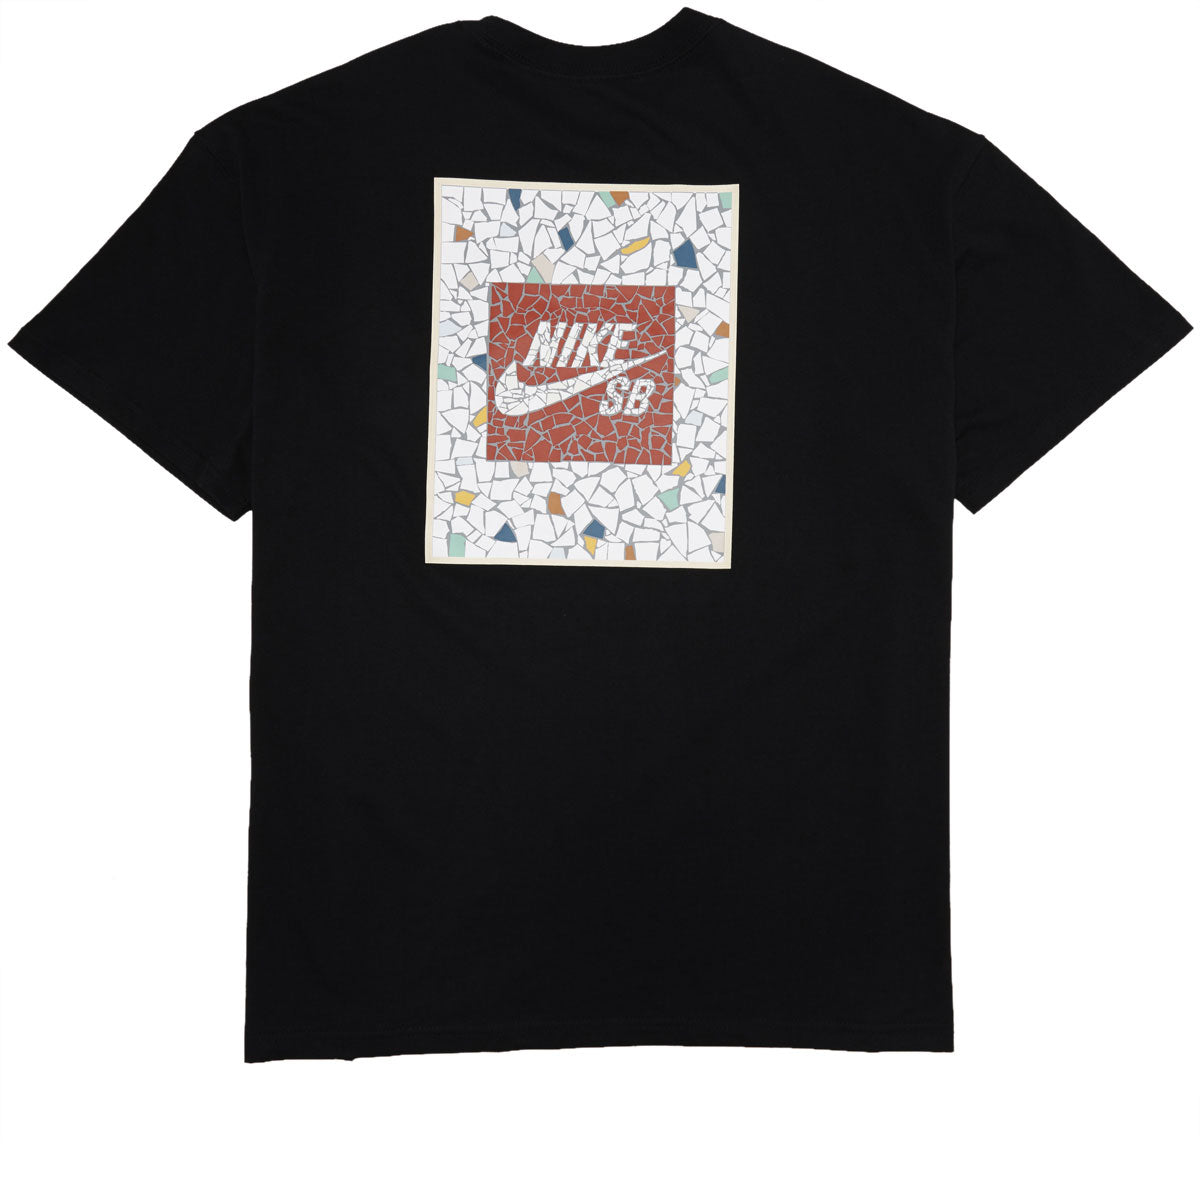 Nike SB Mosaic T-Shirt - Black image 1